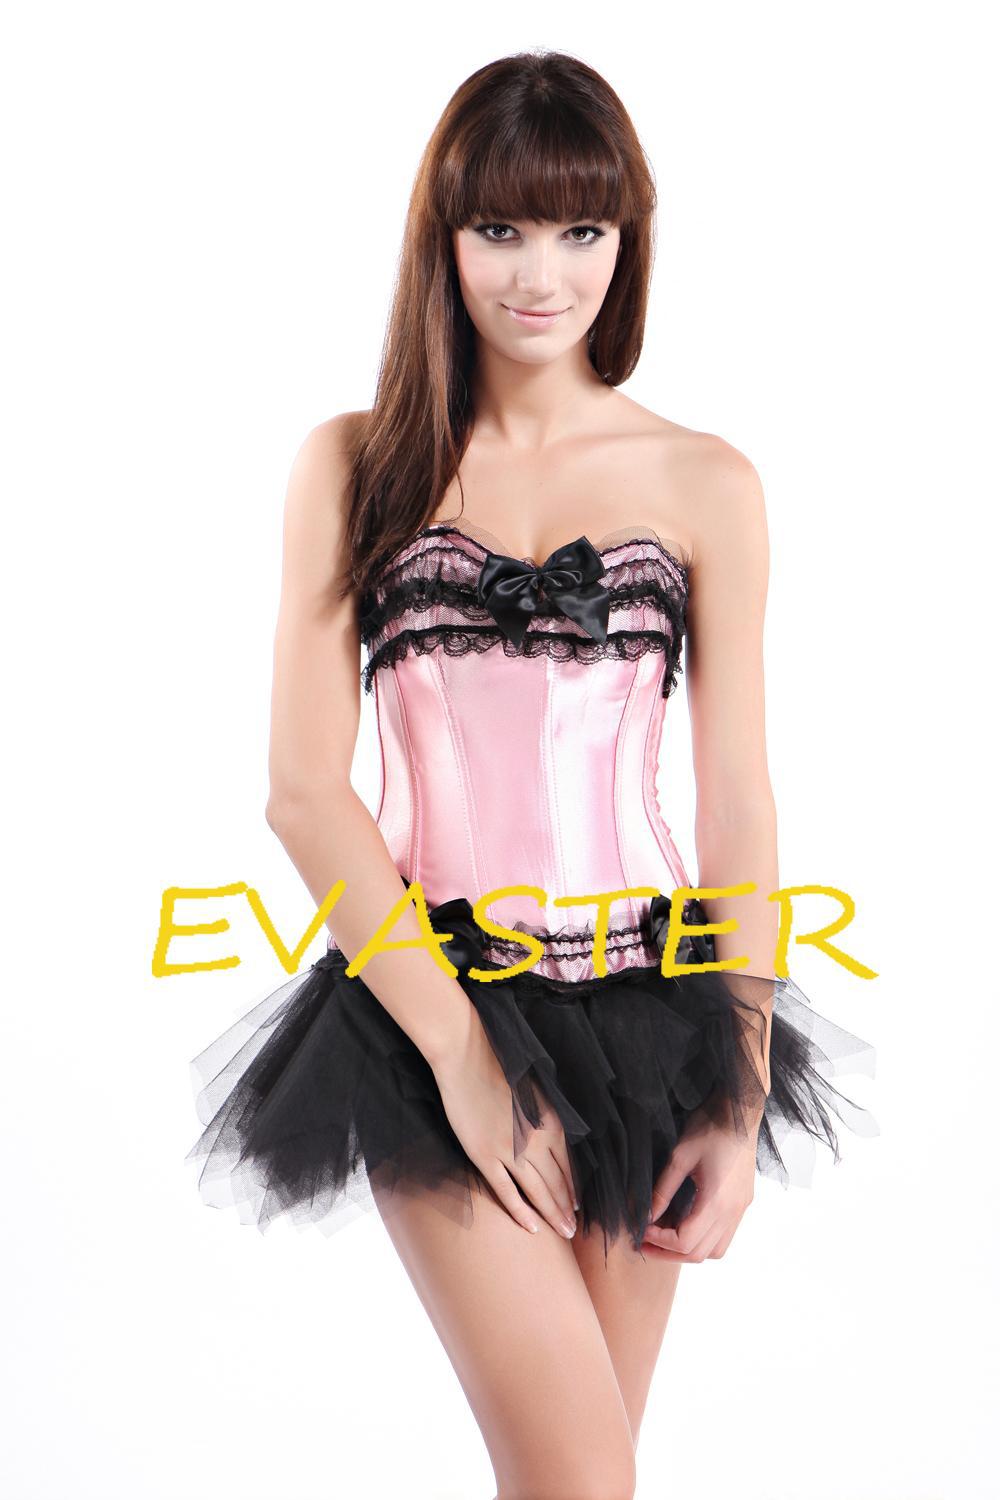 hotsale deluxe cute fashionable sexy woman pink & black corset dress